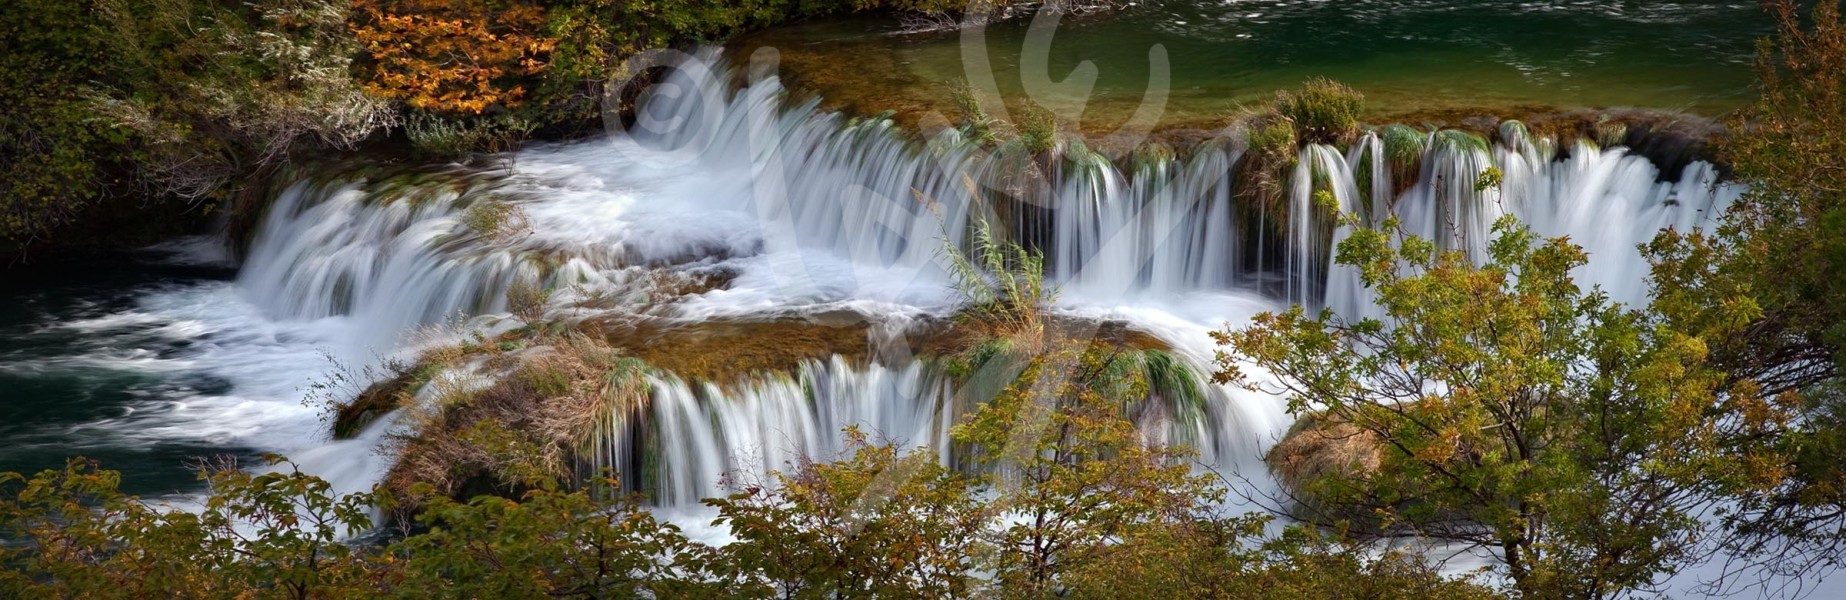 CROATIA Krka National Park Waterfall